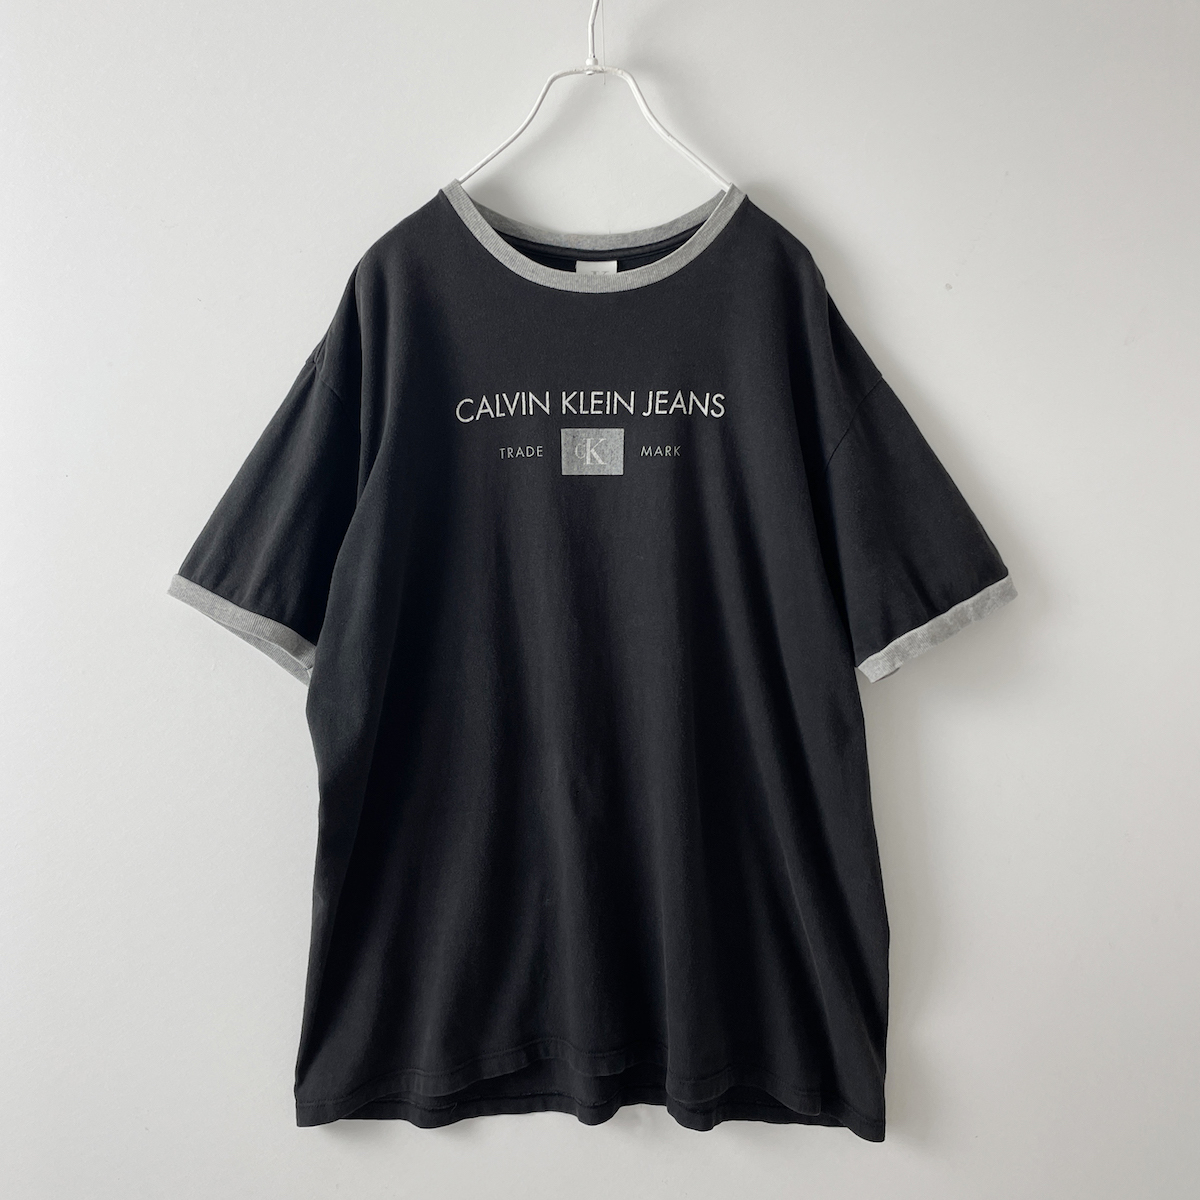 90s - 00s Calvin Klein メンズ XL 相当 USA製 ロゴ プリント 半袖 リンガー Tシャツ 黒 ブラック オーバーサイズ ヴィンテージ モノトーン_画像4